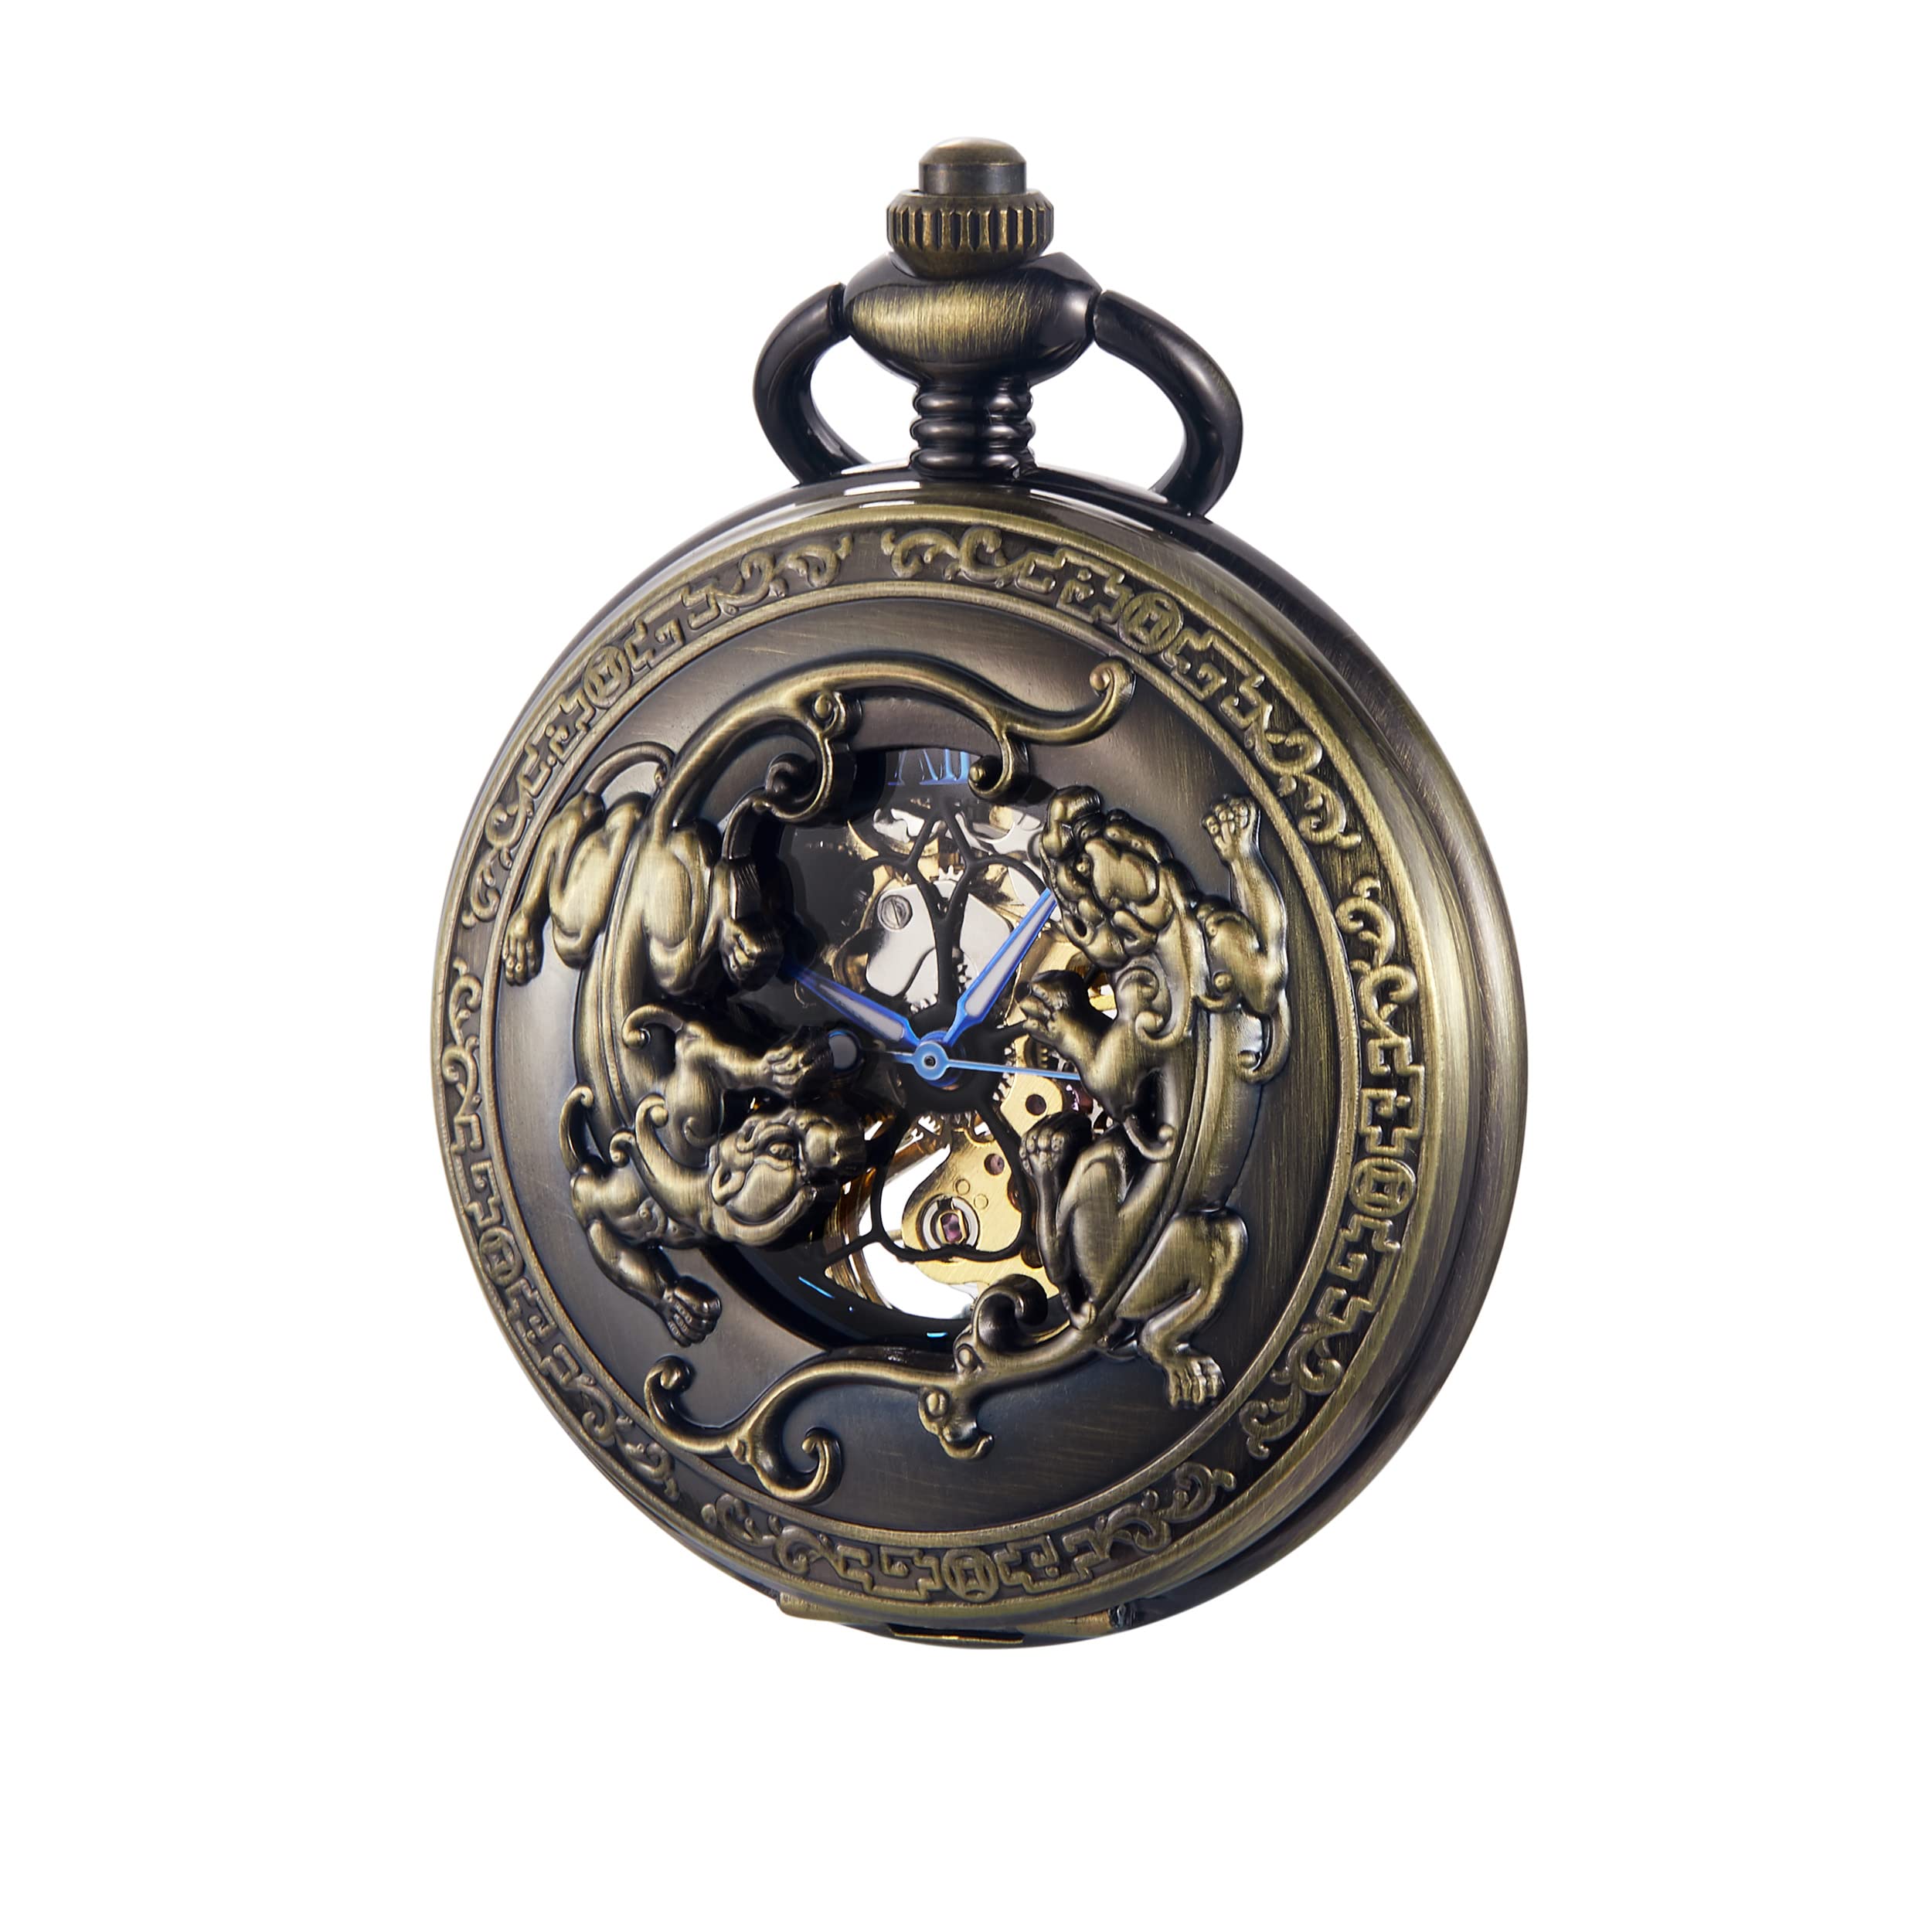 Bronze Men's Antique Mechanical Pocket Watch, Skeleton Mechanical Roman Numerals Pocket Watch with Chain + Box